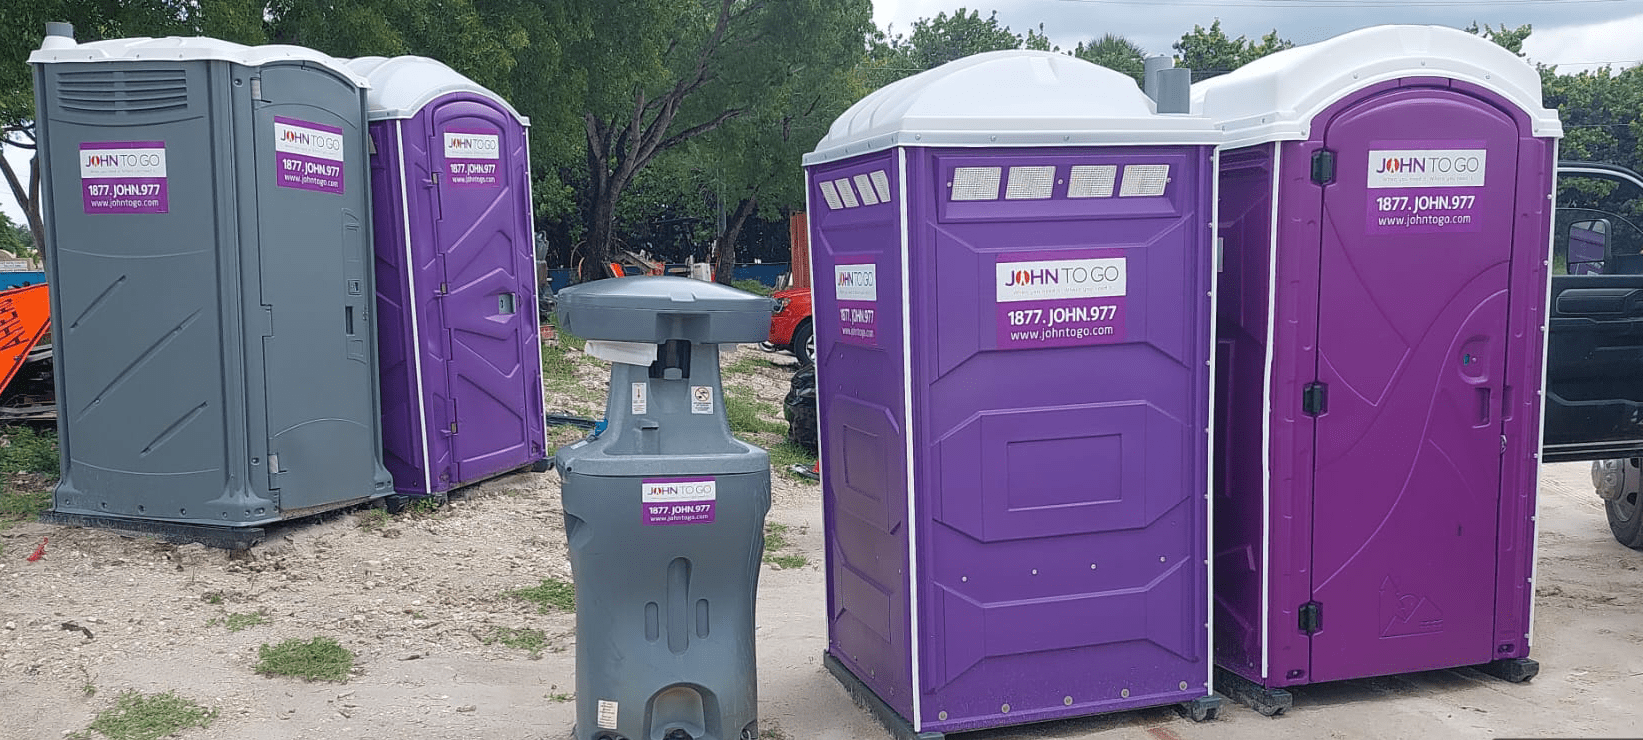 Portable hand washing station inside a restroom trailer